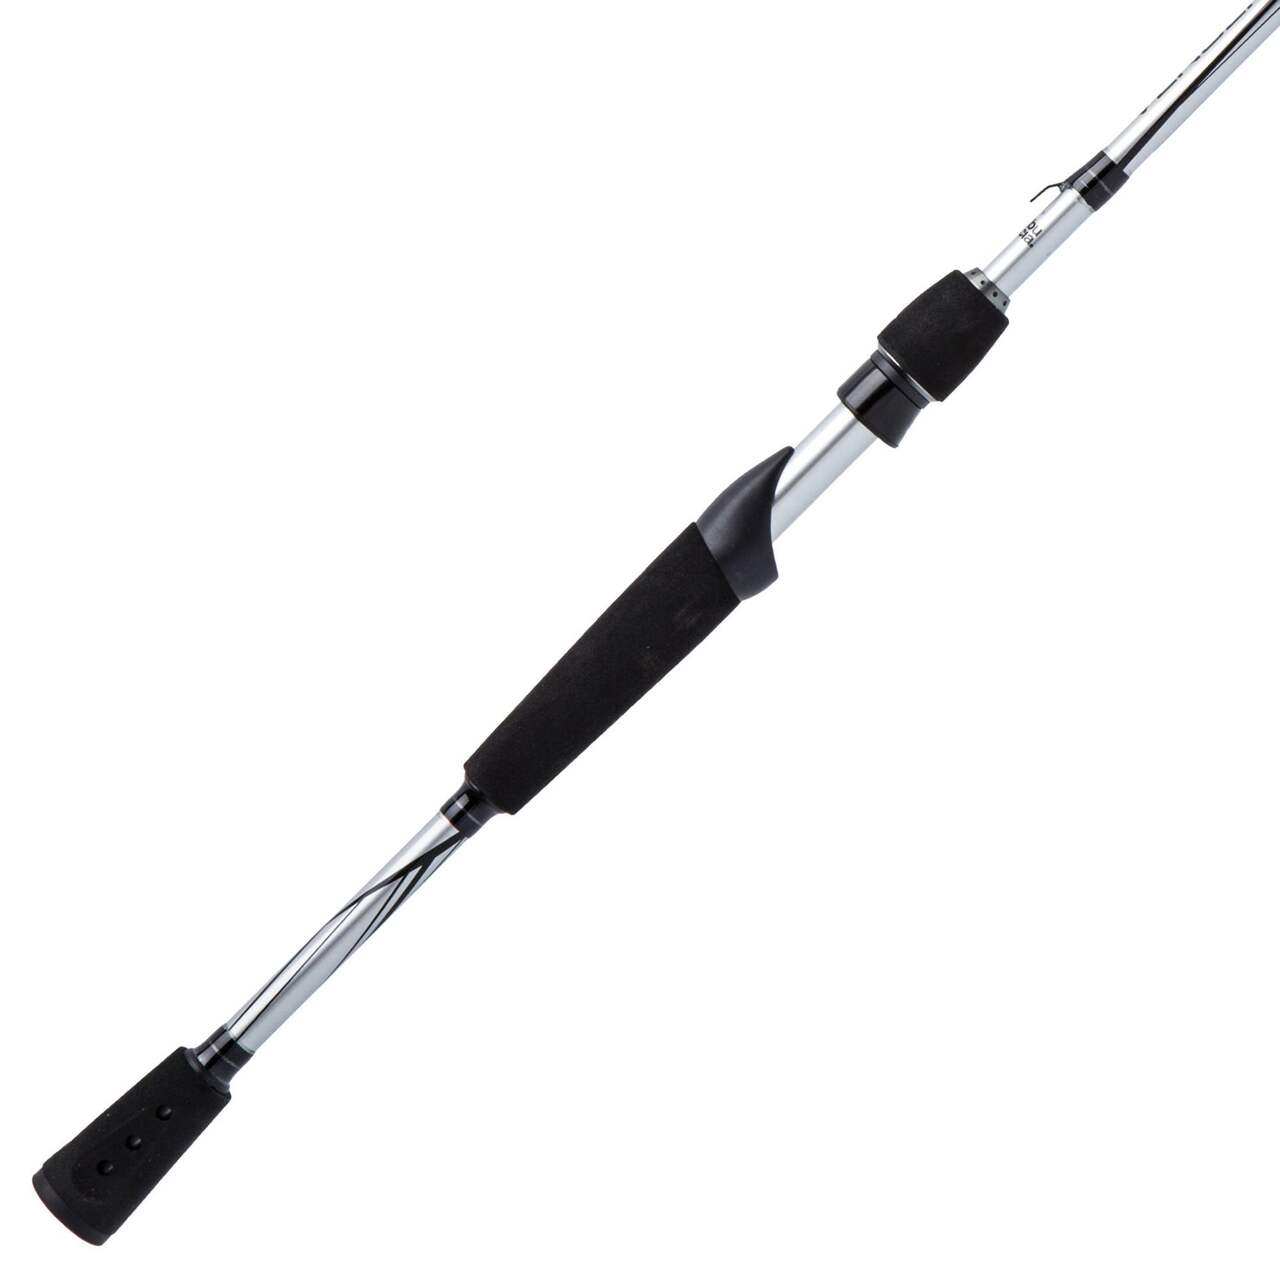 Obei Feeder Fishing Telescopic Spinning Casting Travel Rod 3.0 3.3